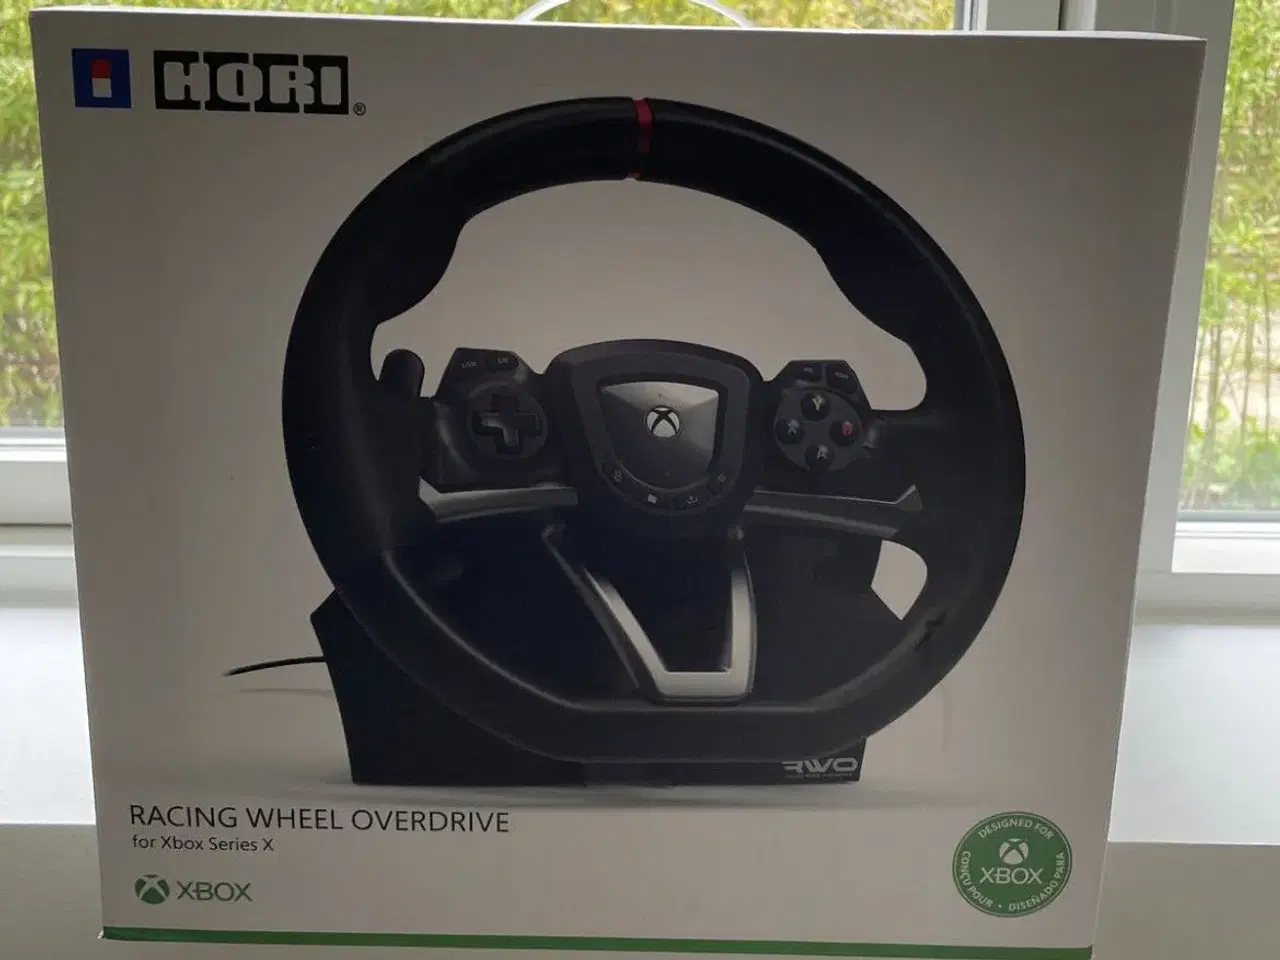 Billede 1 - Racing wheel overdrive for Xbox Series X